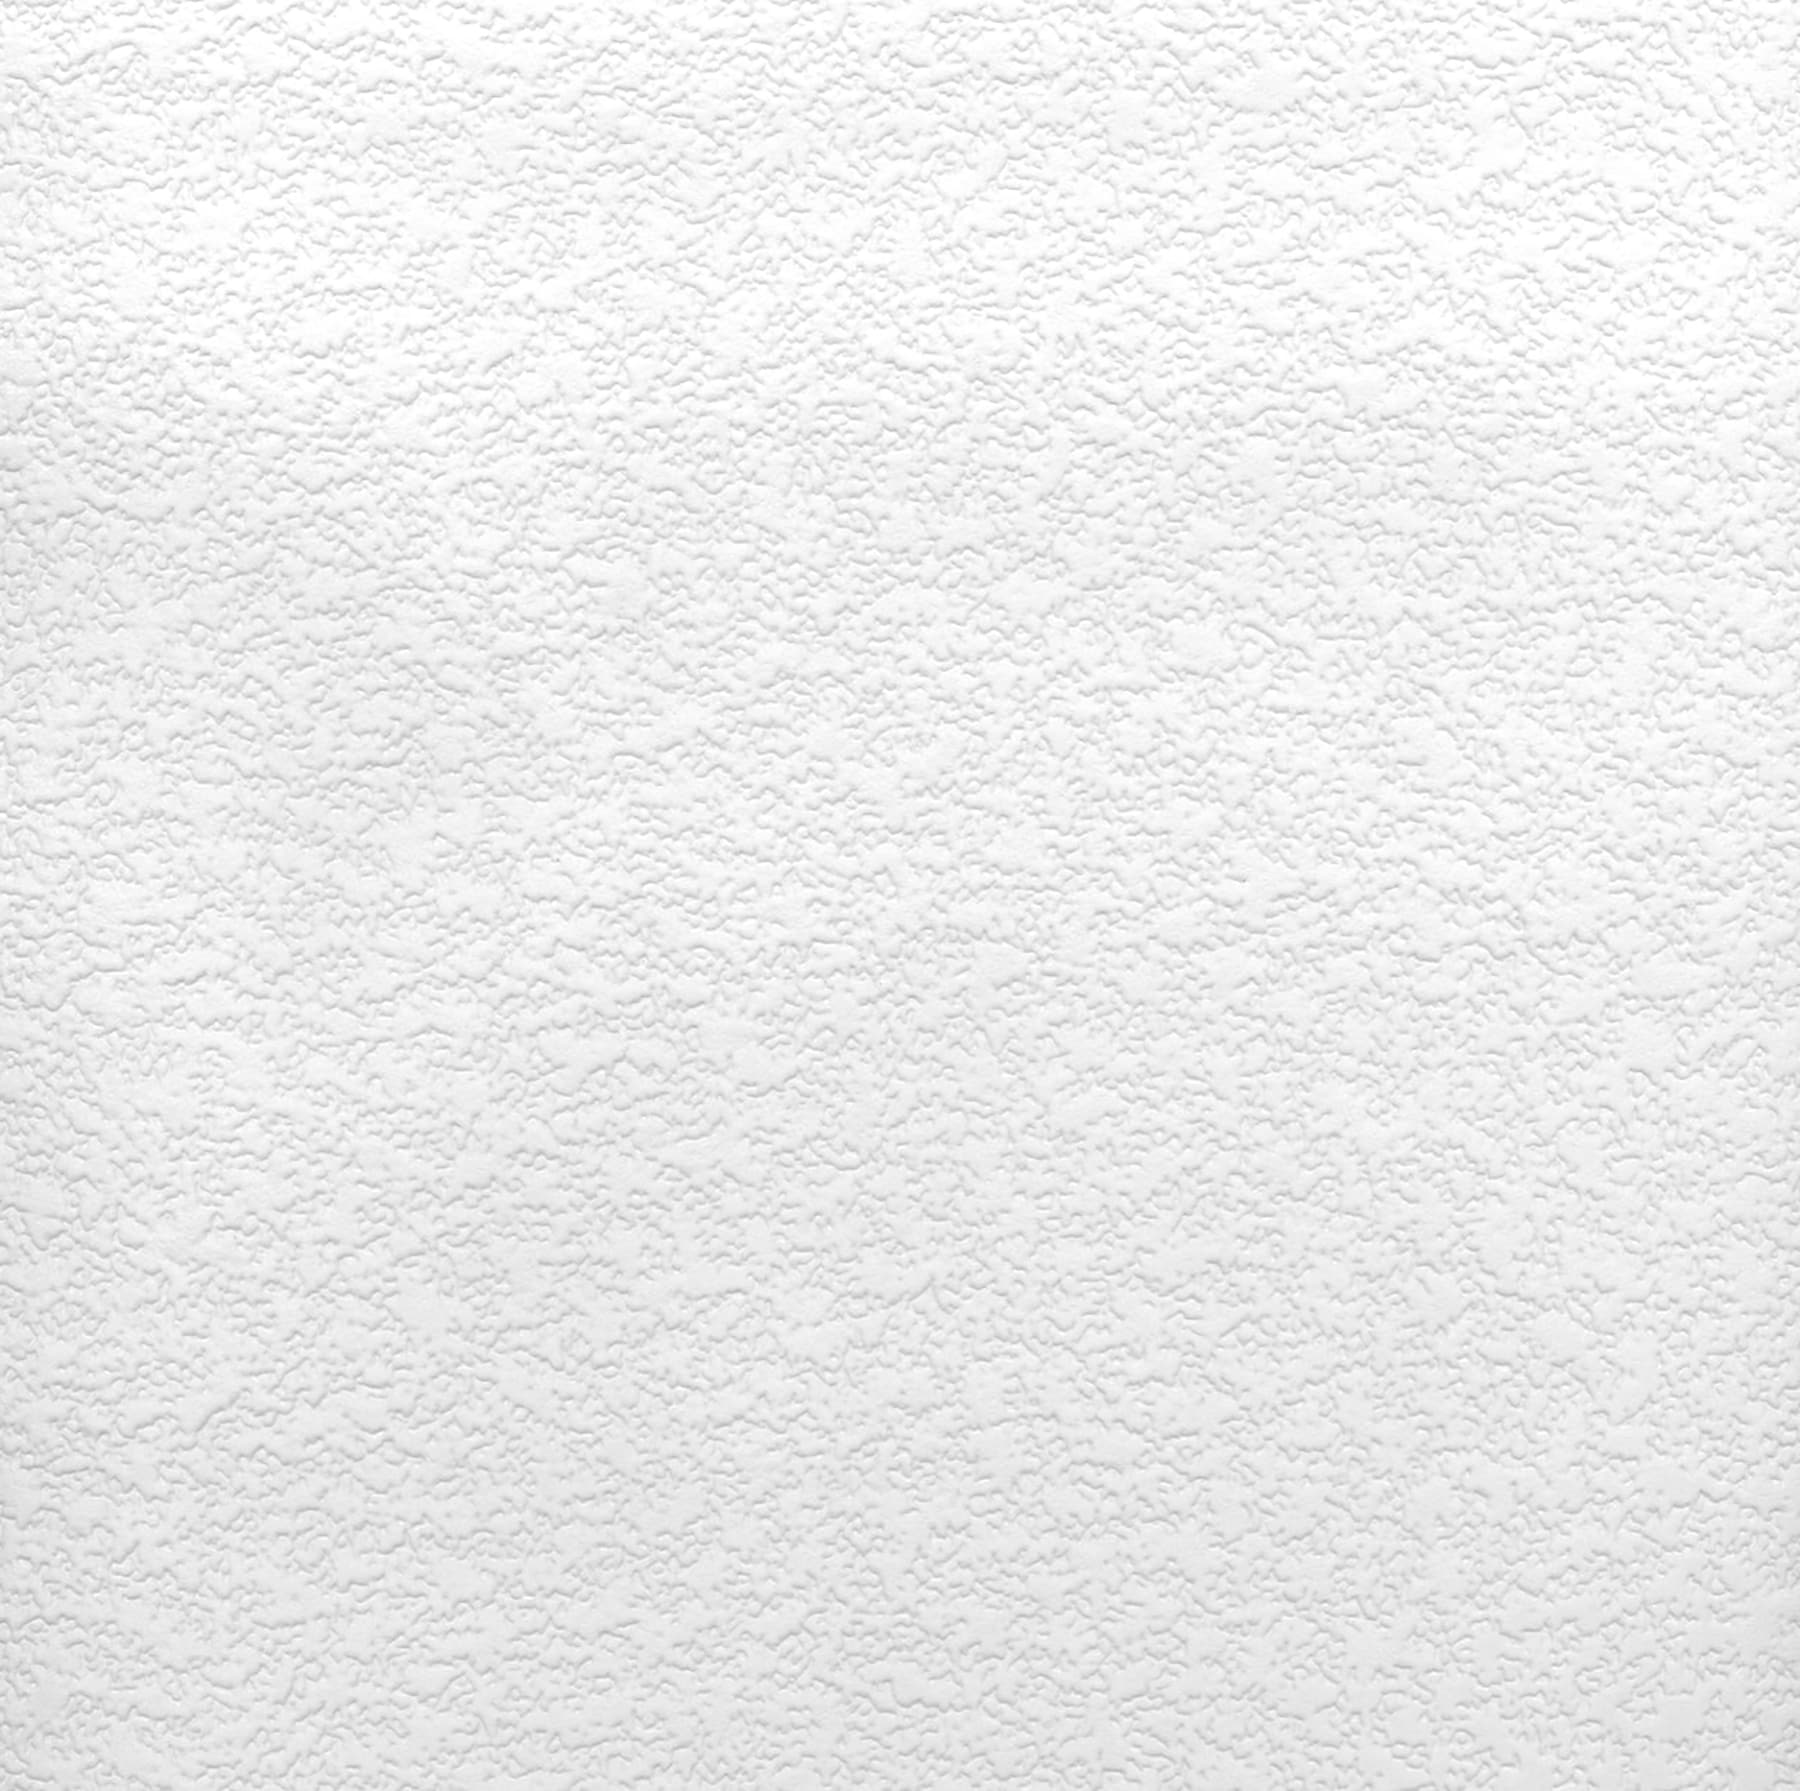 iPhoneXpaperscom  iPhone X wallpaper  vf78whiteornamenttexturepattern